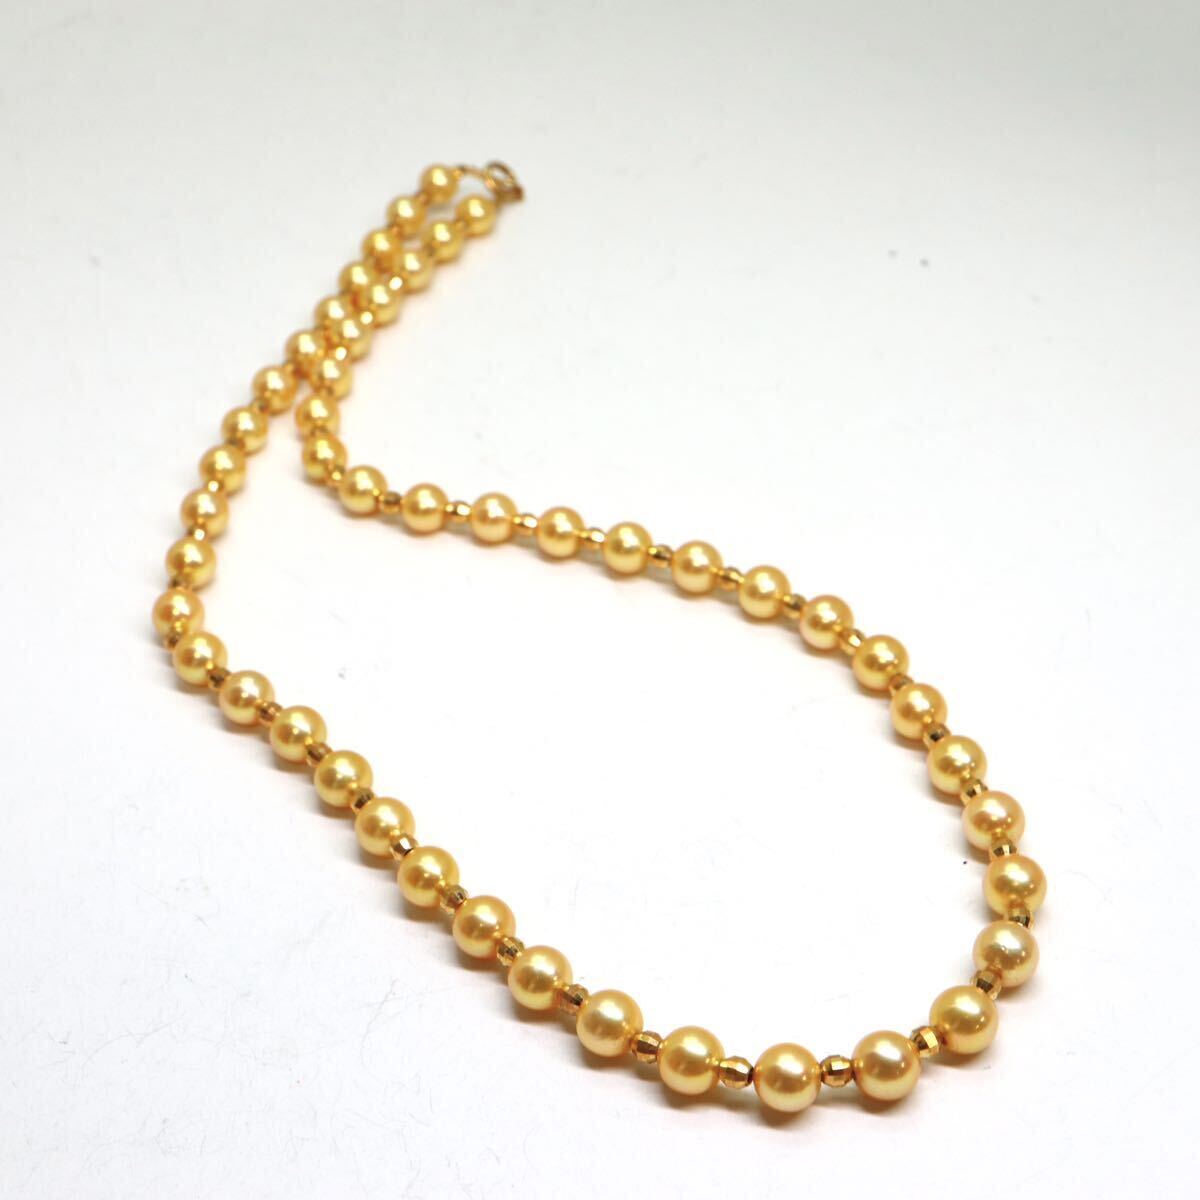 《K18(750) アコヤ本真珠ネックレス》M 15.3g 約5.5-6.0mm珠 約40cm pearl necklace ジュエリー jewelry EA8/EB0の画像5